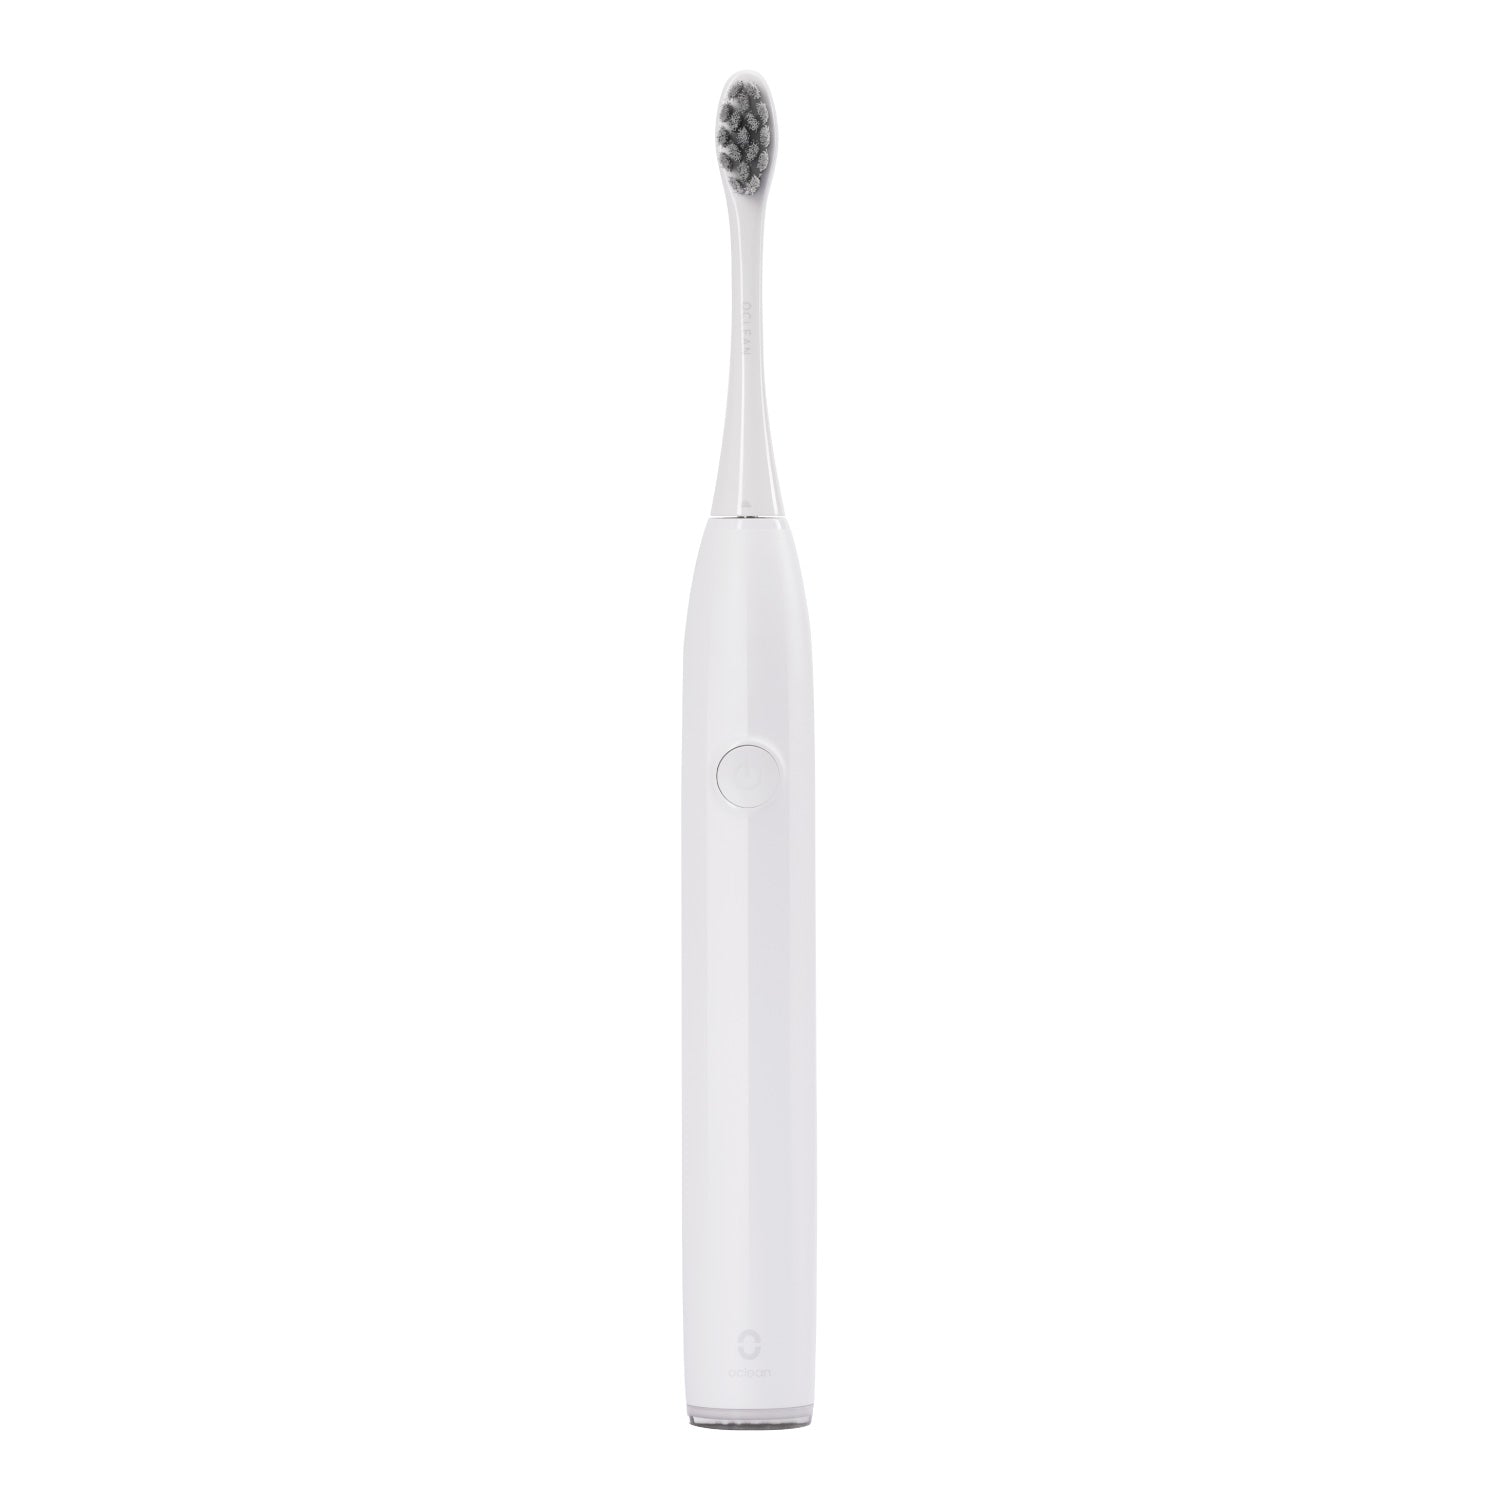 Oclean Endurance Electric Toothbrush-Toothbrushes-Oclean Global Store